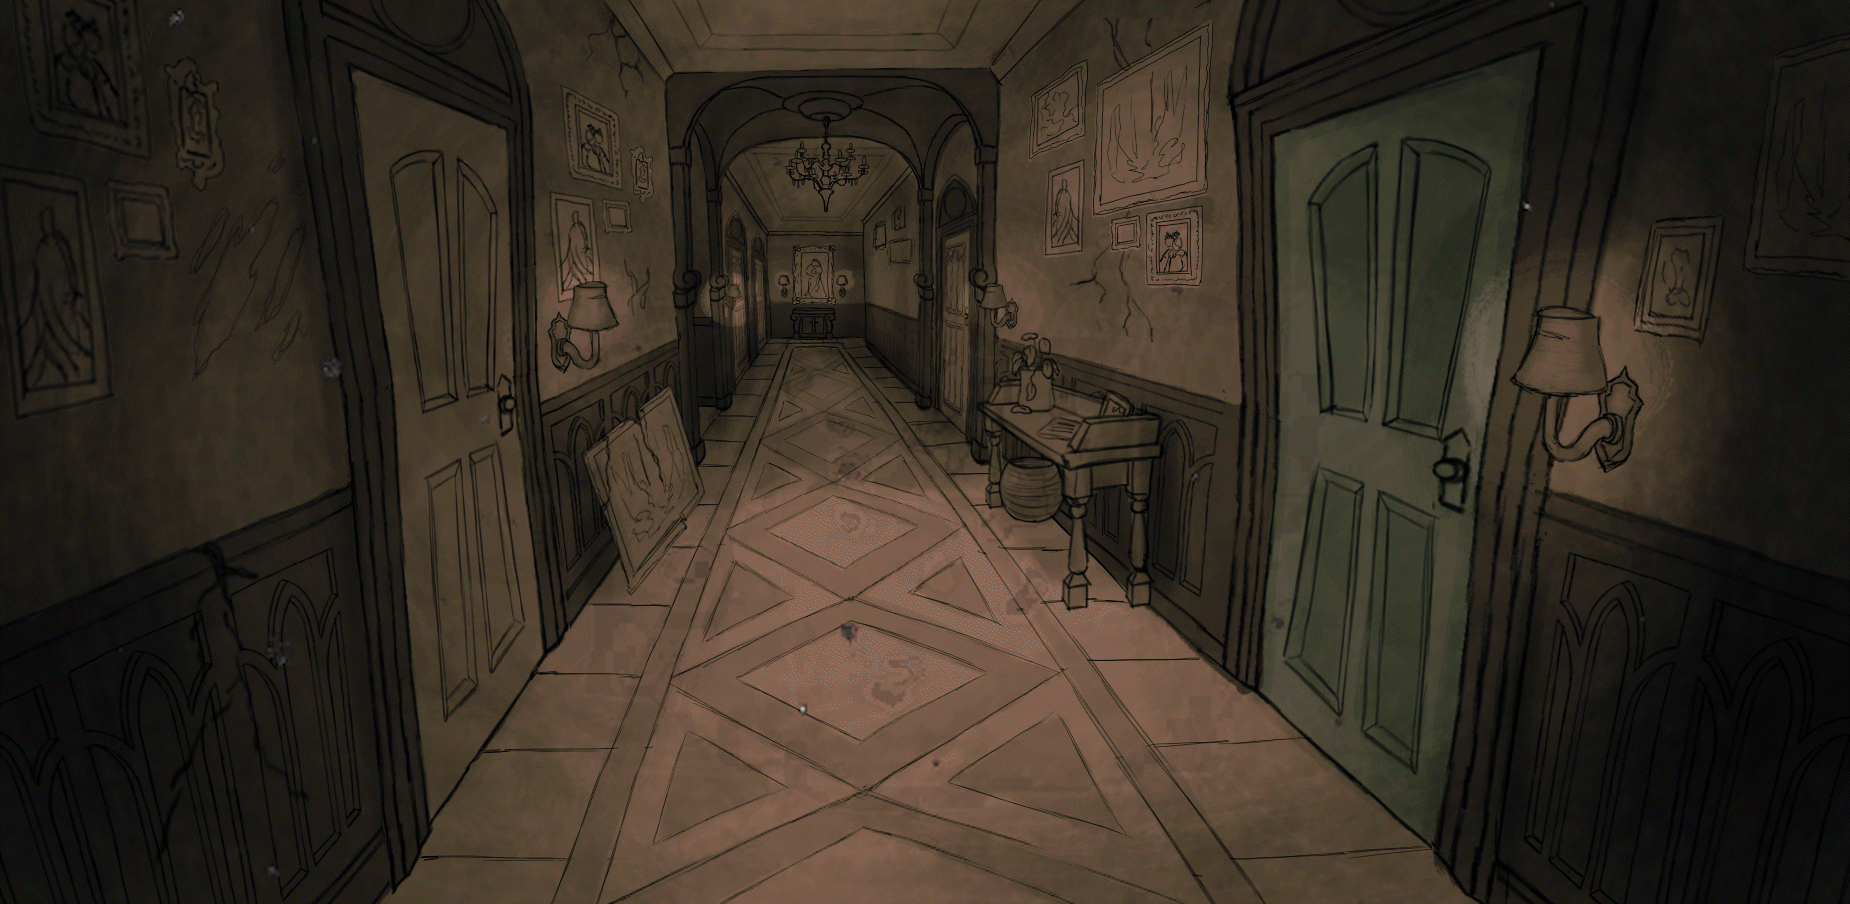 Sketch of the hallway by Cynthia